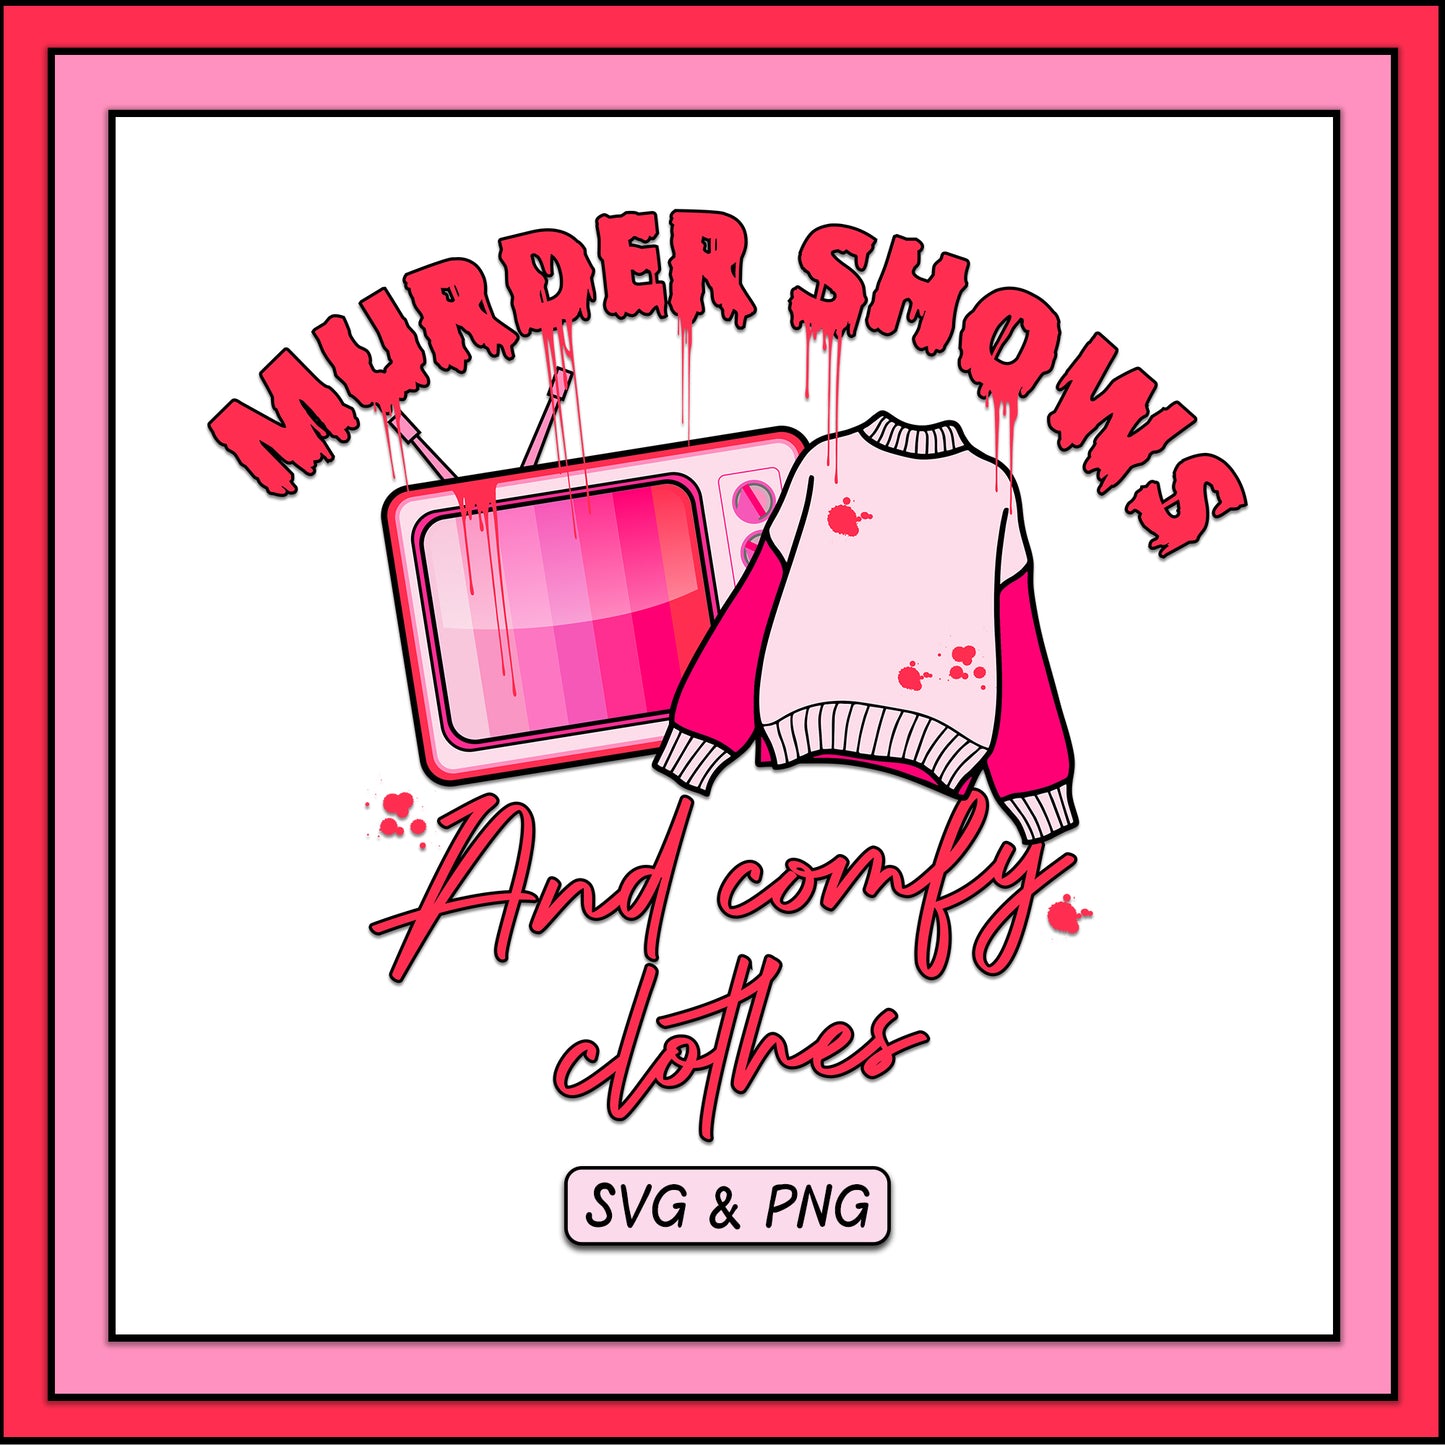 Murder Shows & Comfy Clothes - SVG & PNG